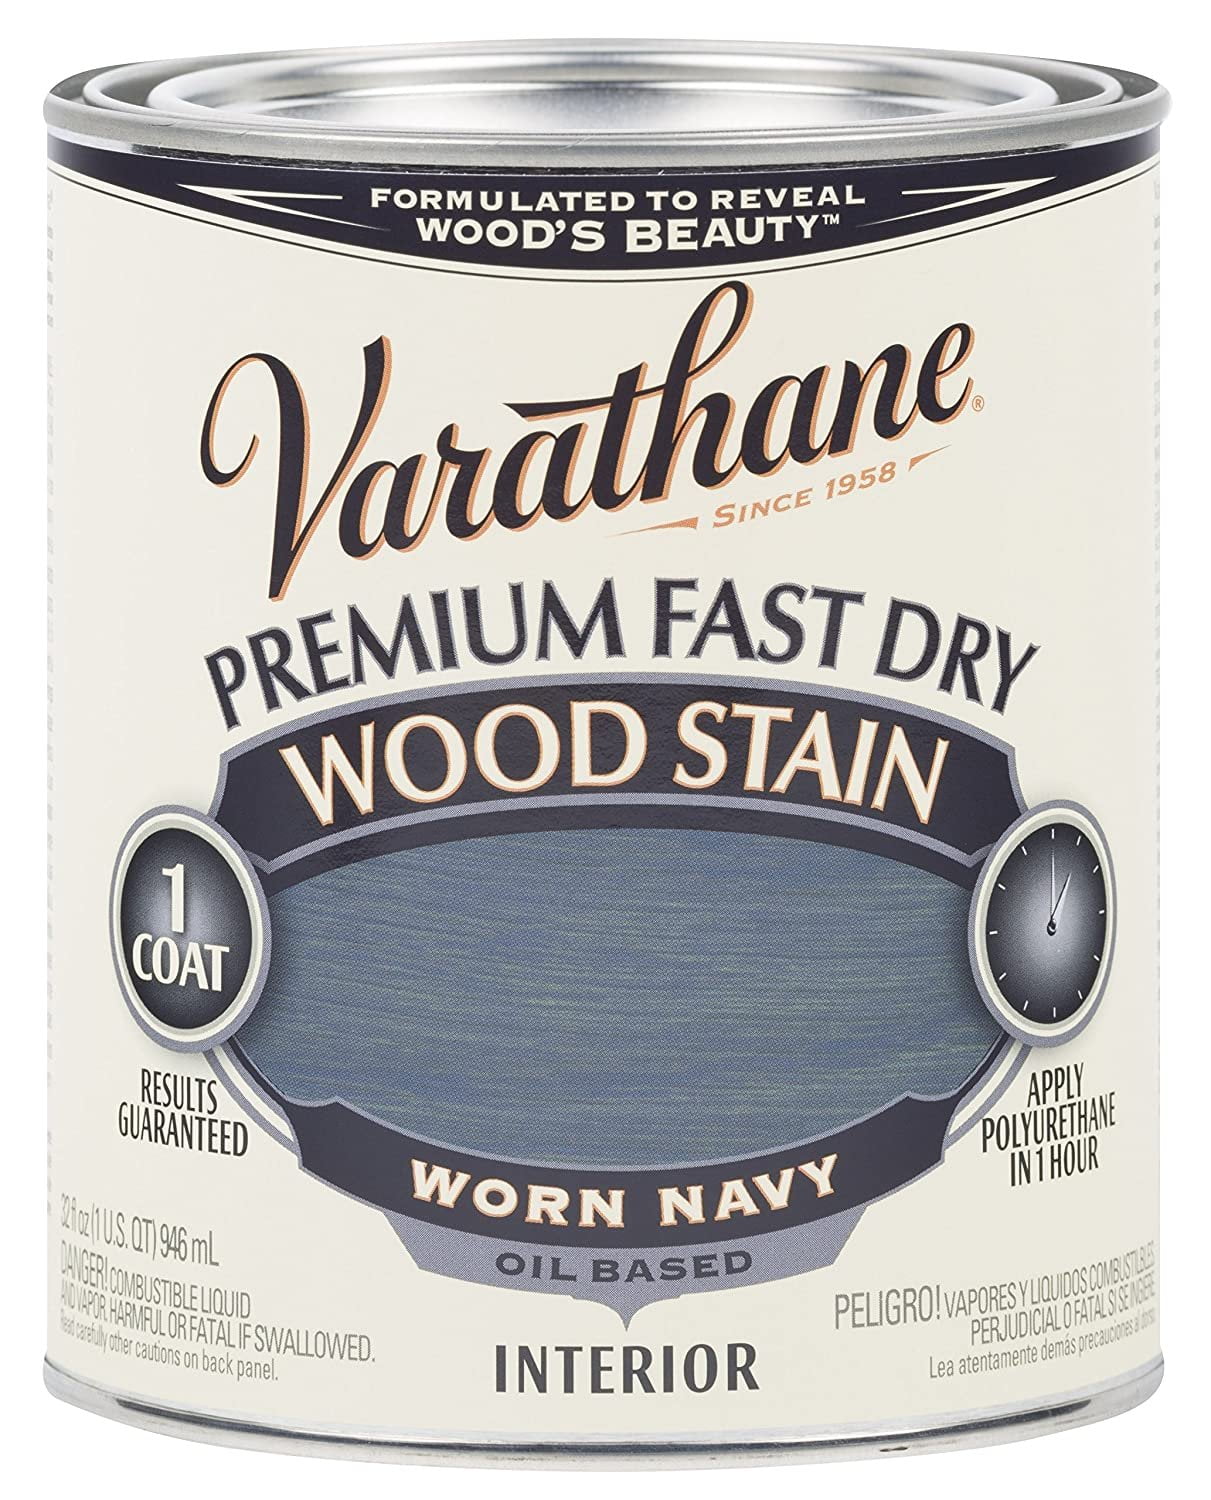 Worn Navy, Varathane Premium Fast Dry Wood Stain-297428, Quart, 2